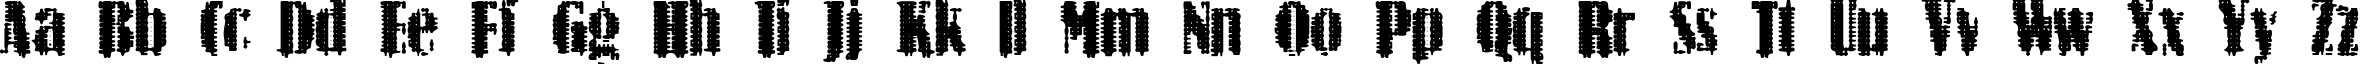 Пример написания английского алфавита шрифтом BN-ArNoN